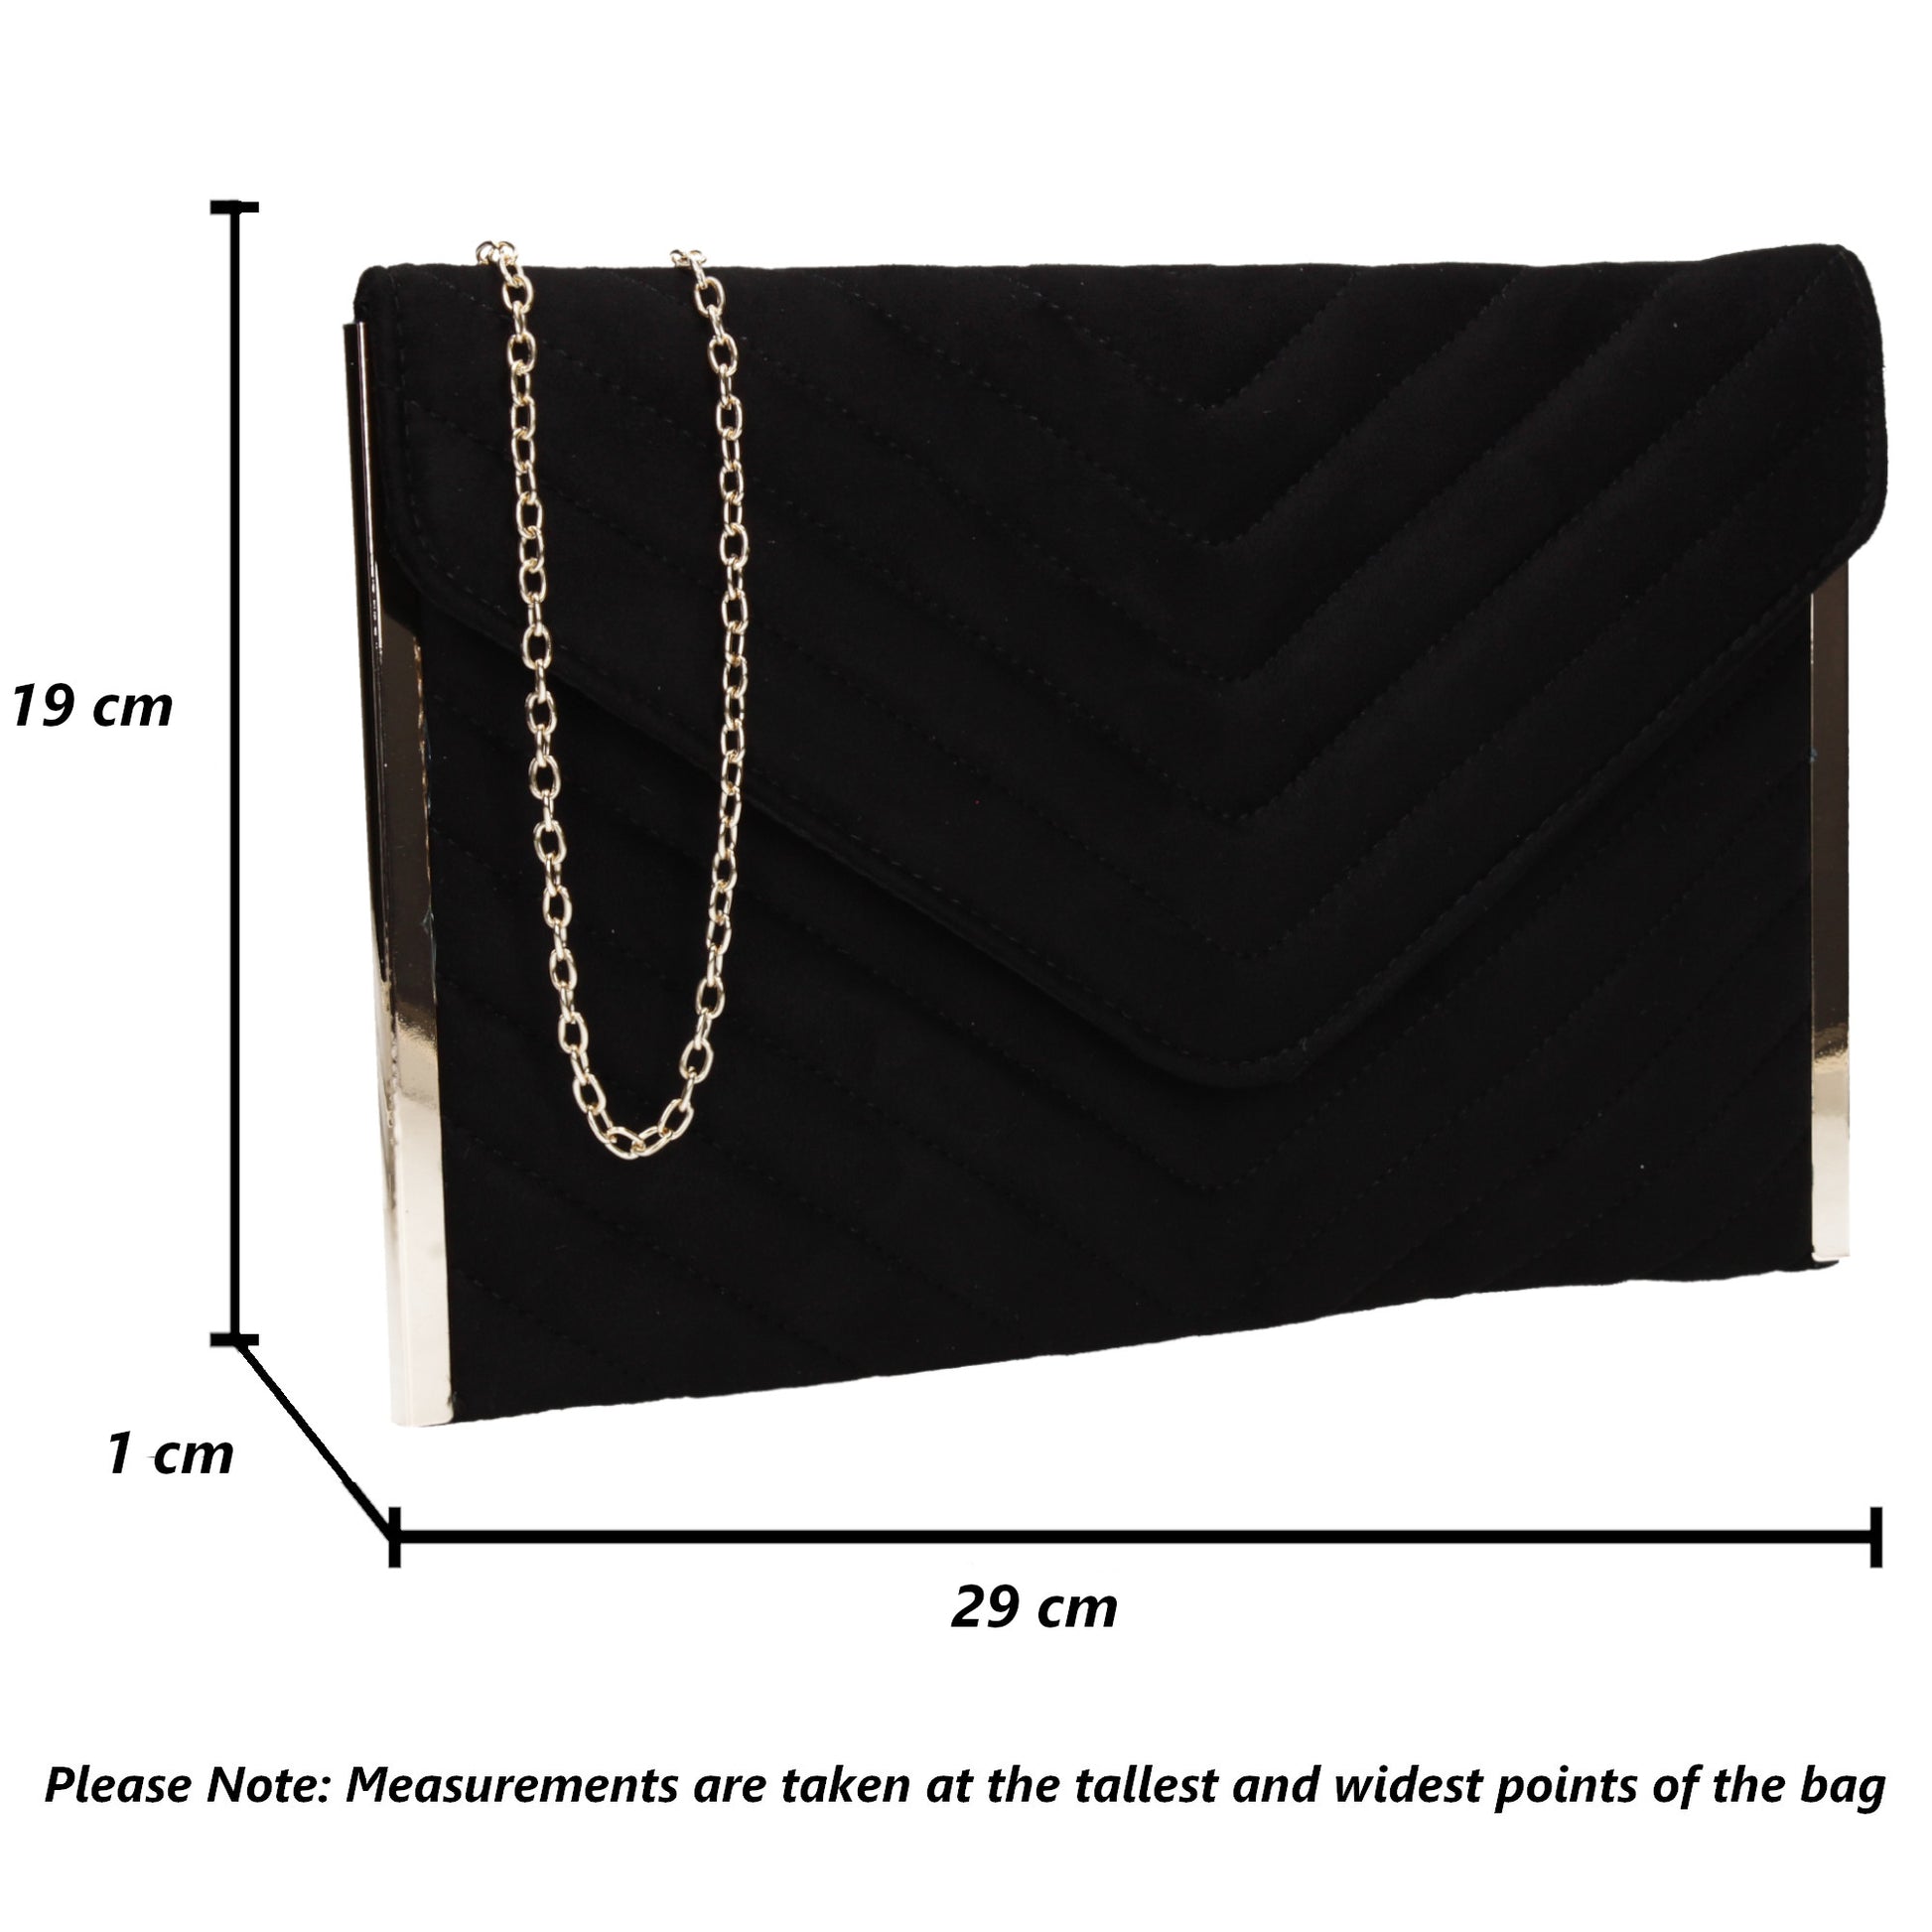 SWANKYSWANS Tessa Clutch Bag Black Cute Cheap Clutch Bag For Weddings School and Work